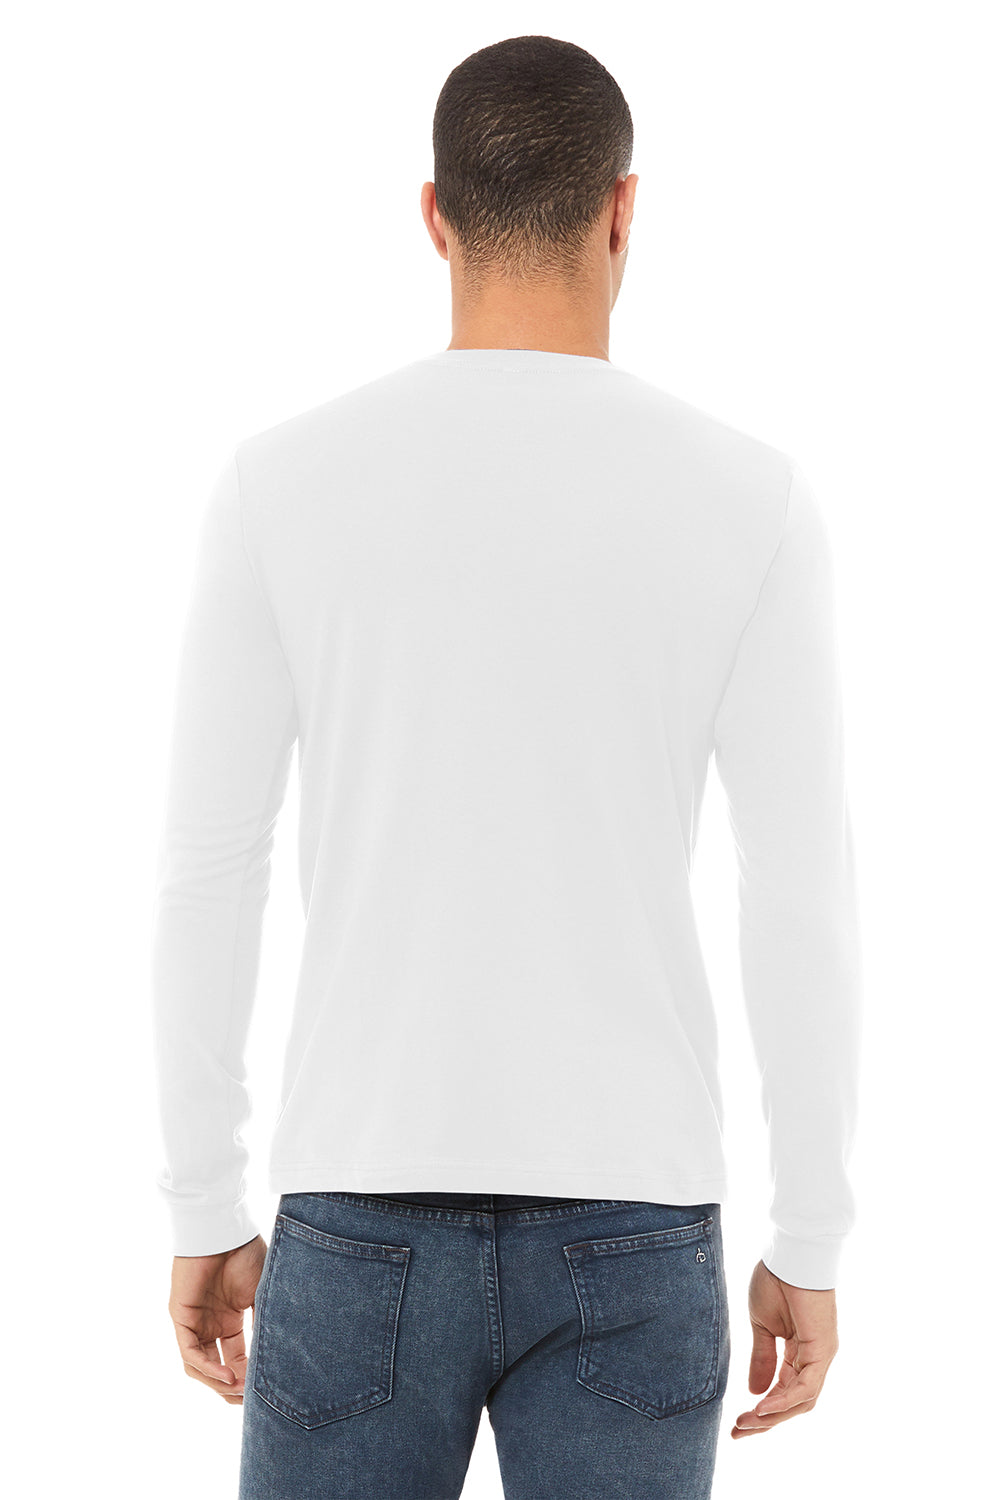 Bella + Canvas BC3501/3501 Mens Jersey Long Sleeve Crewneck T-Shirt White Model Back